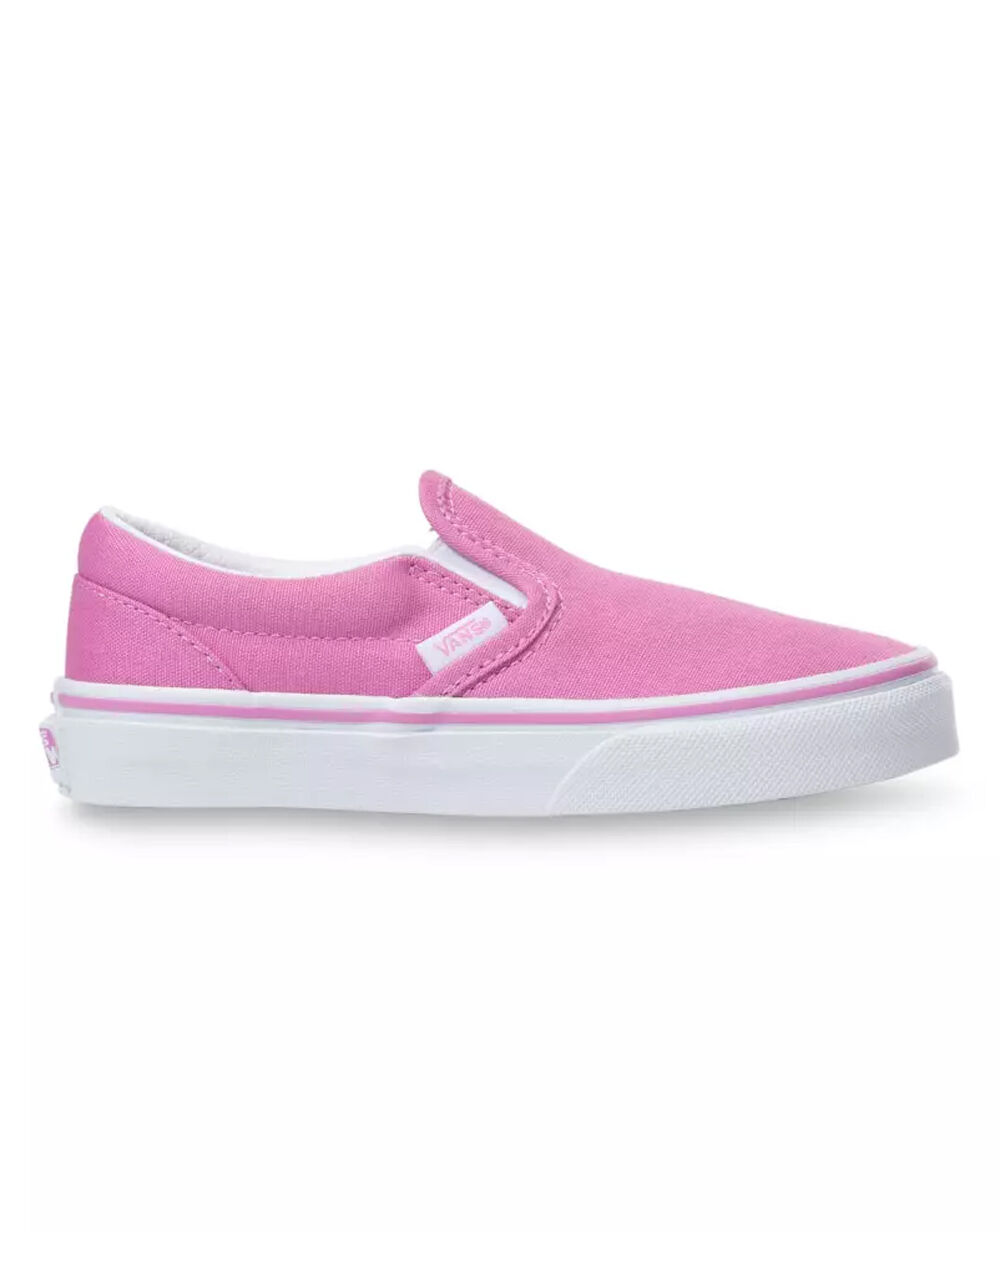 VANS Classic Slip-On Kids Shoes - FUCHSIA PINK/TRUE WHITE | Tillys